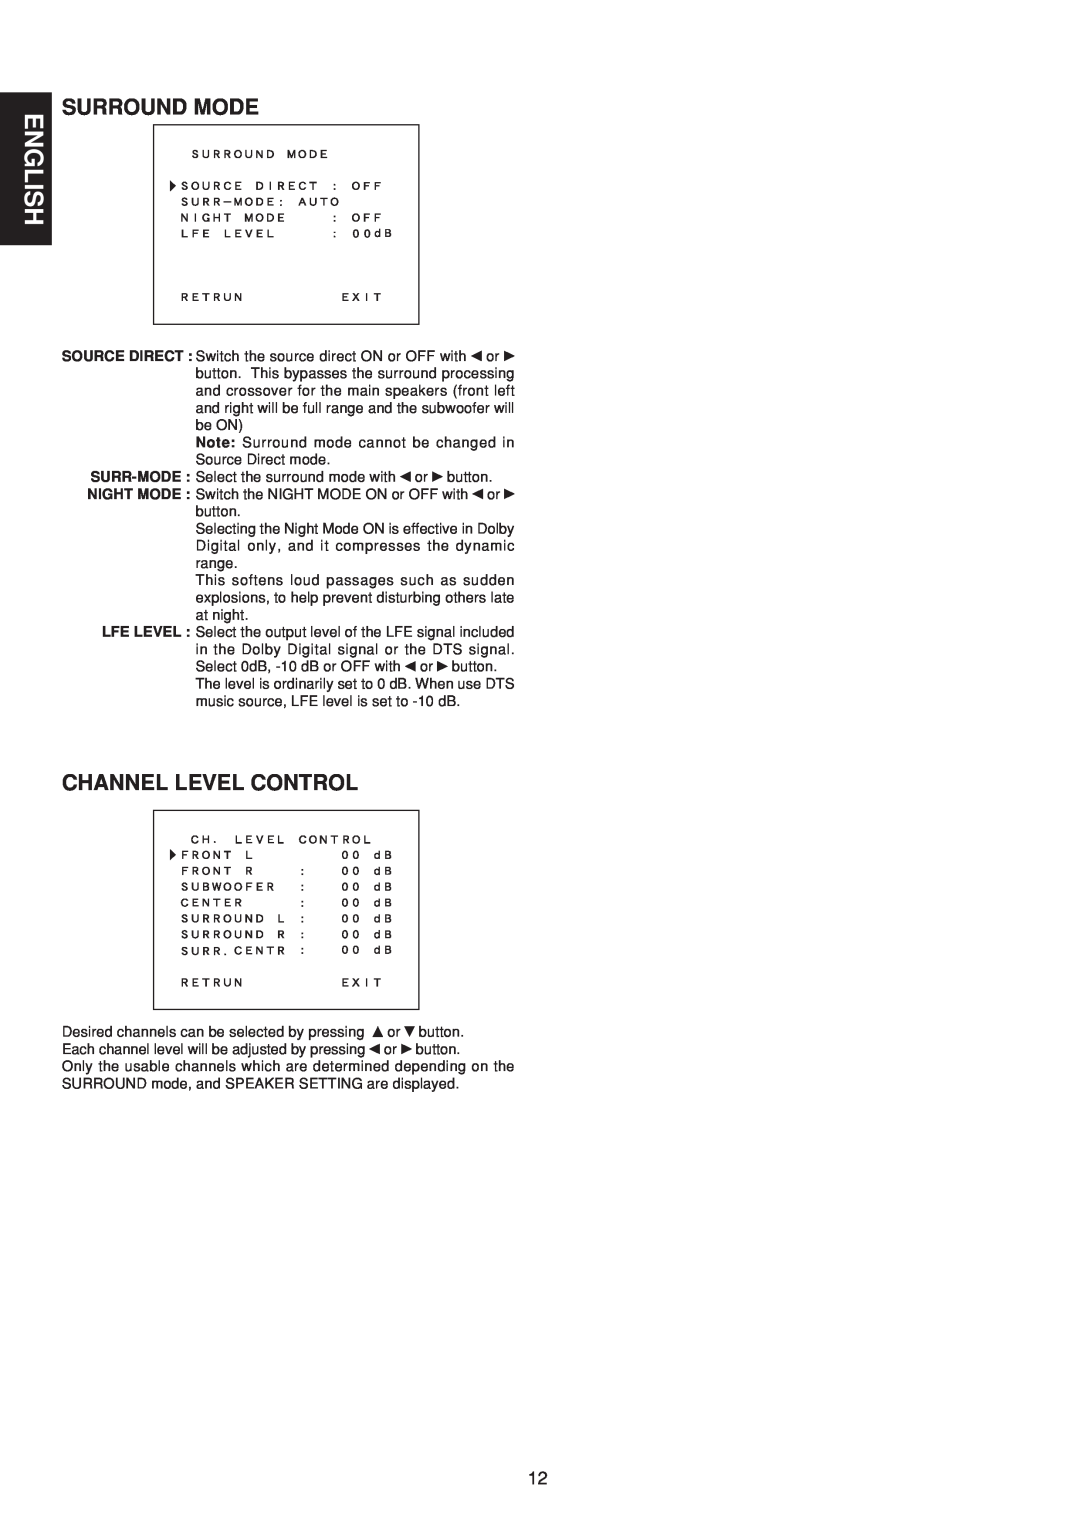 Marantz SR5200 manual English, Surround Mode, Channel Level Control 